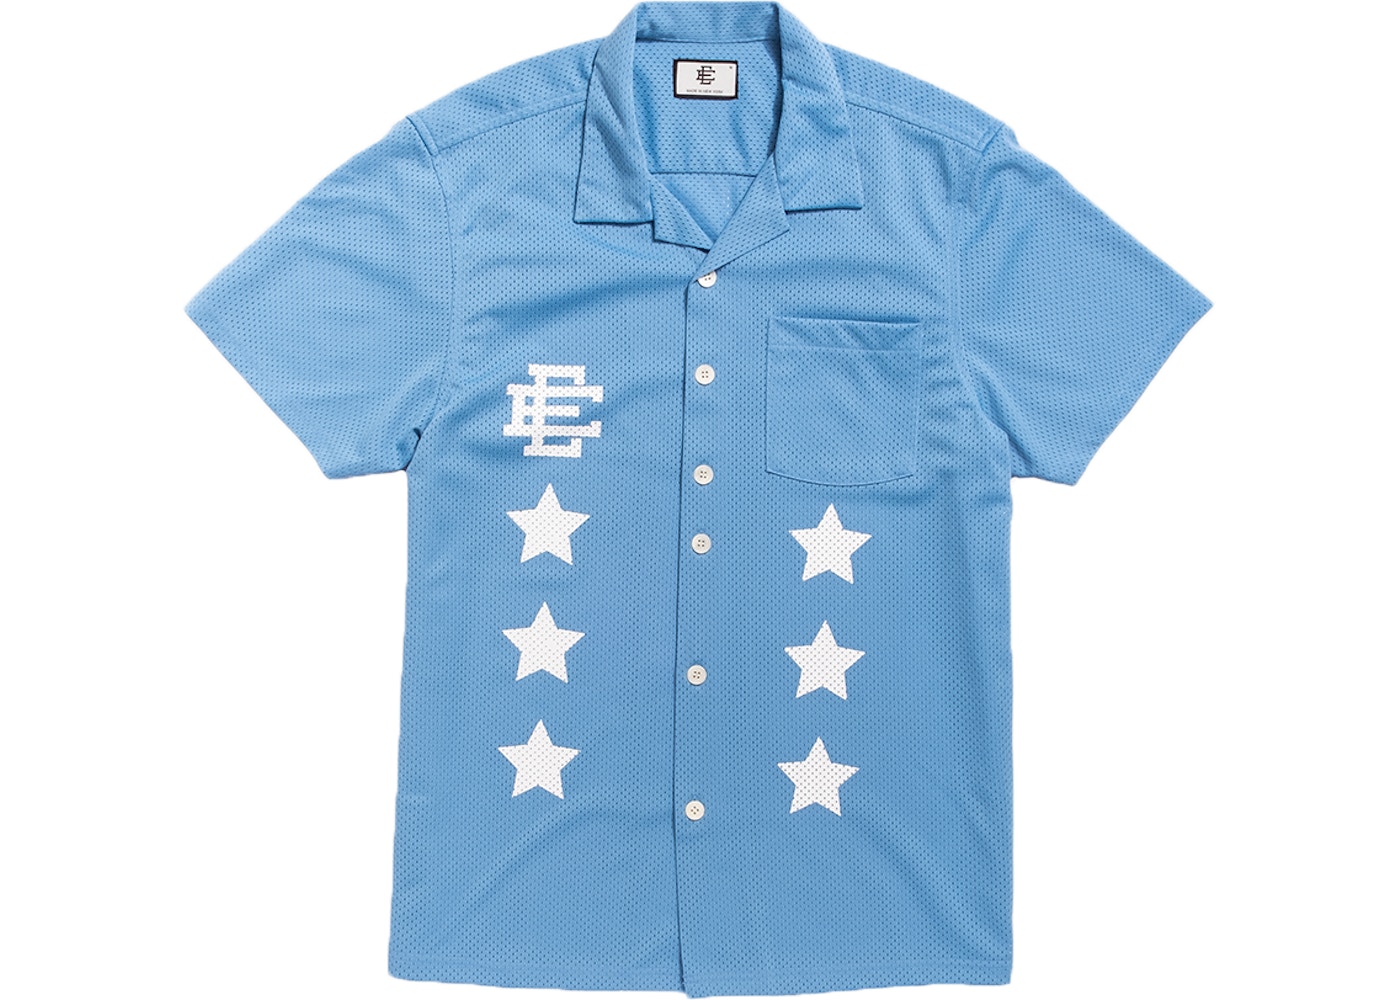 Eric Emanuel EE Basic Shirt Blue - FW19